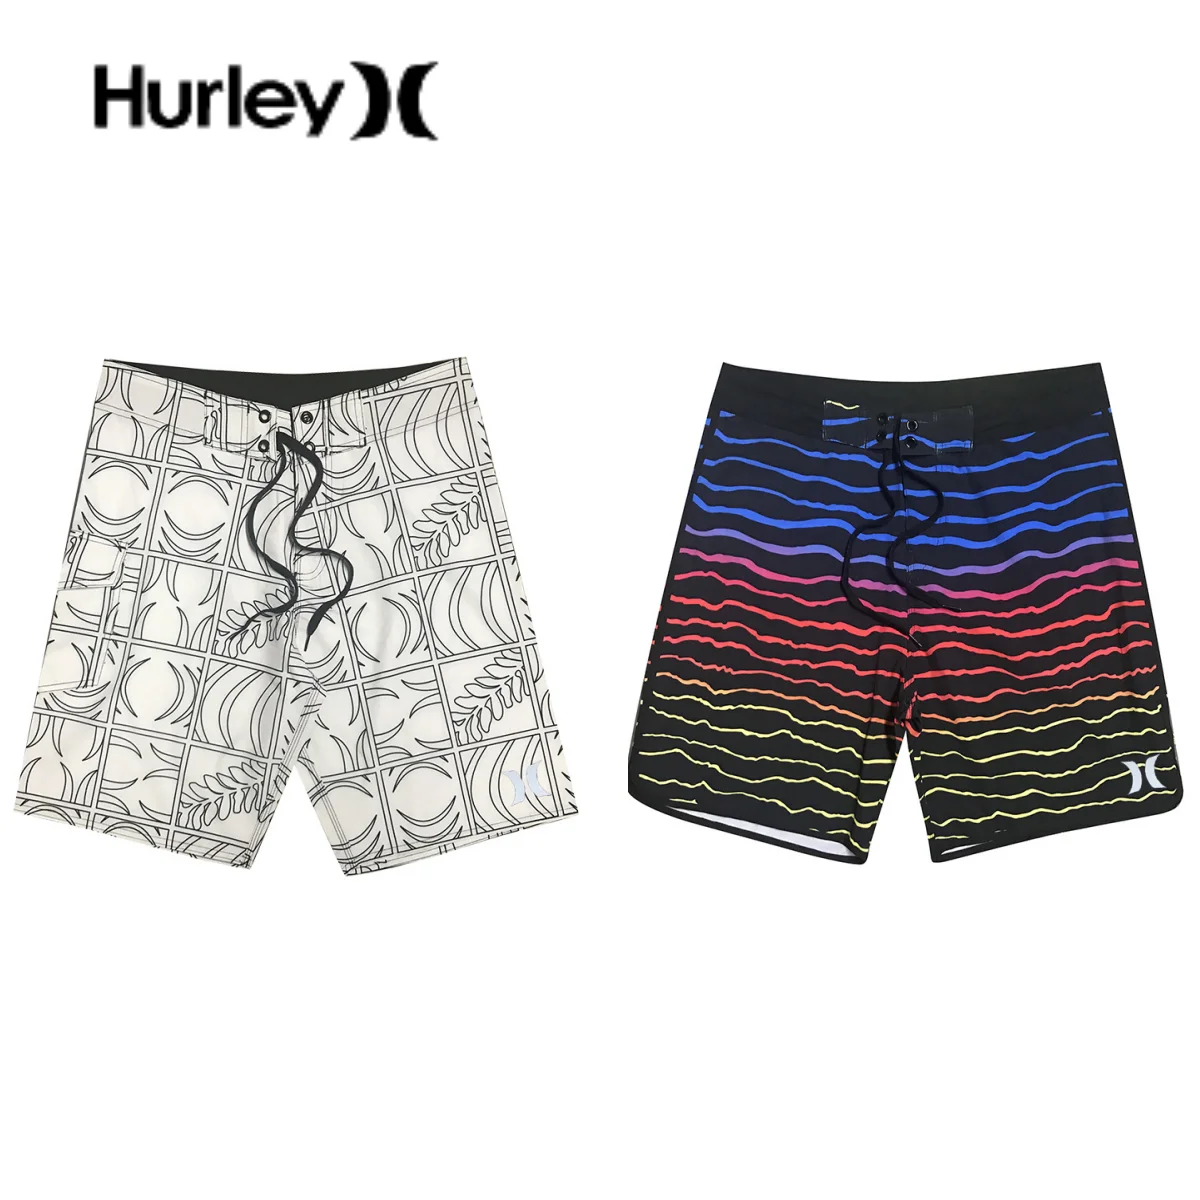 

Hurley Vêtements De Plage Men Swim Trunks Quick Dry Shorts Summer Surf Clothes BOARDSHORTS With Pockets GYM Bodybuilding Shorts